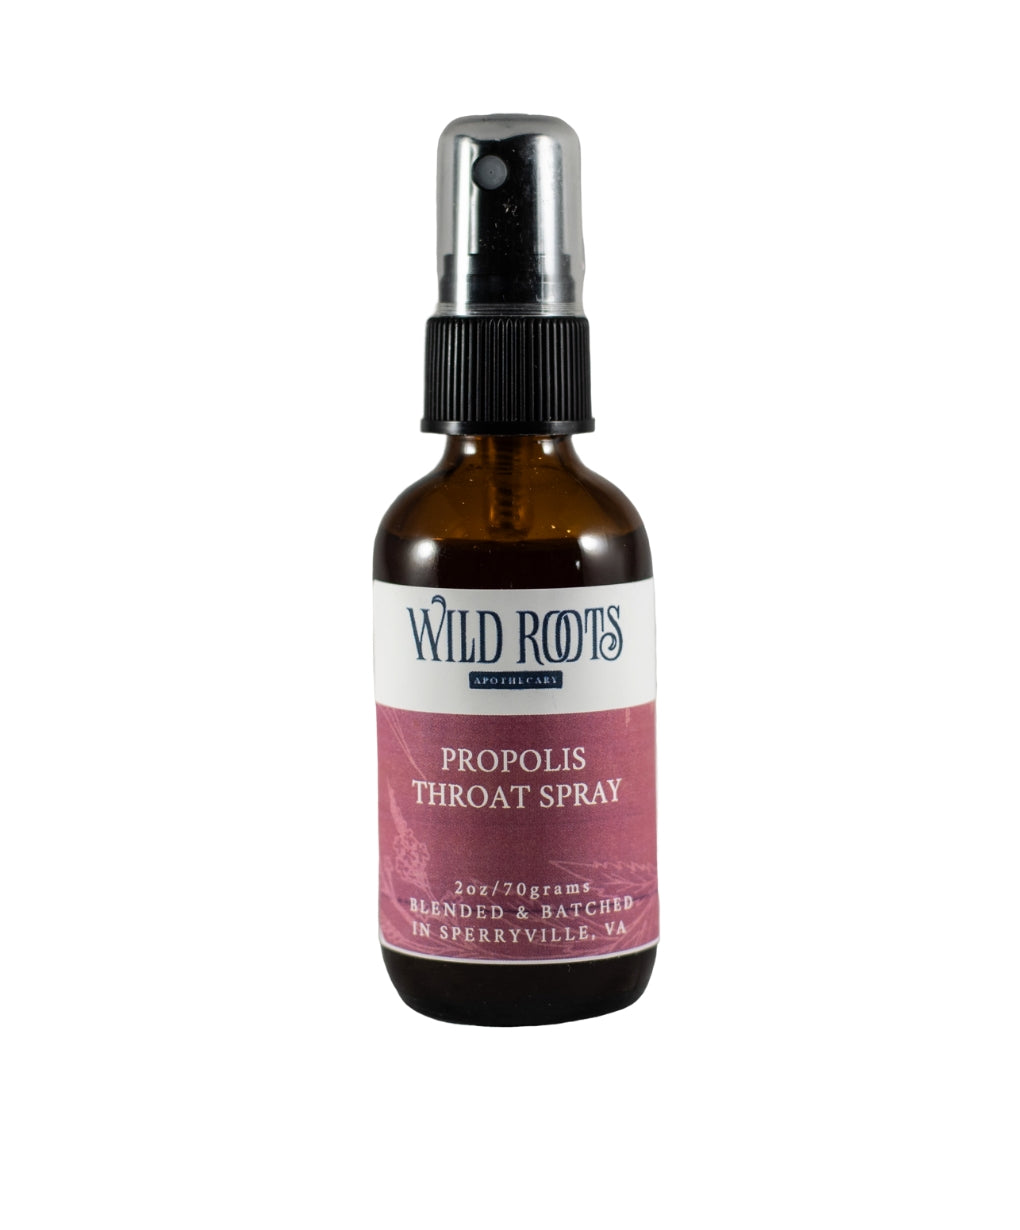 Propolis Throat Spray—Wild Roots Apothecary